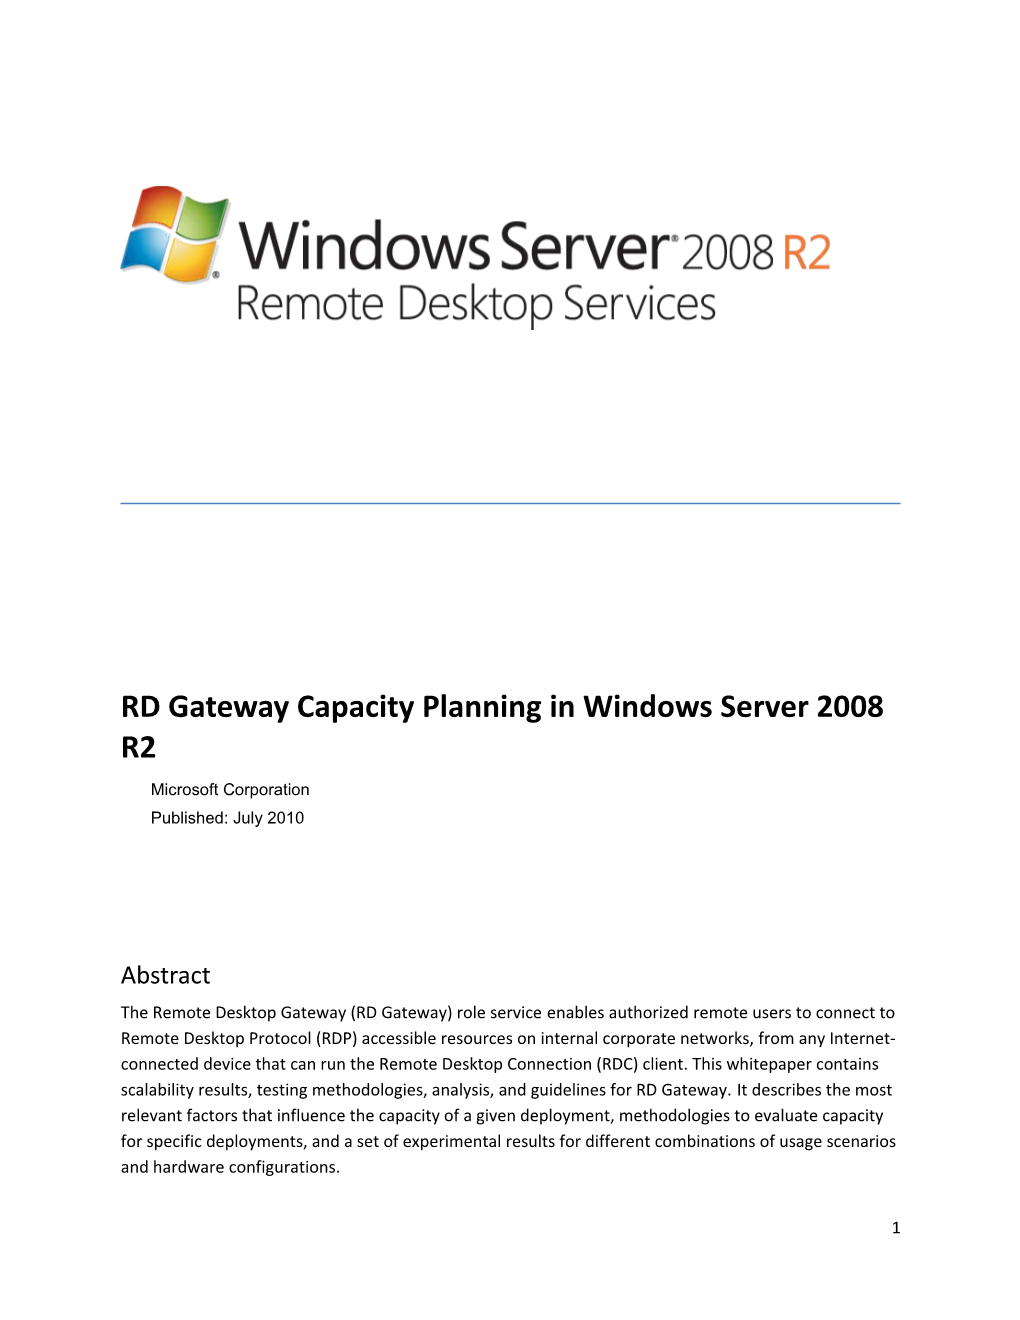 Rdgateway Capacity Planning in Windows Server 2008 R2